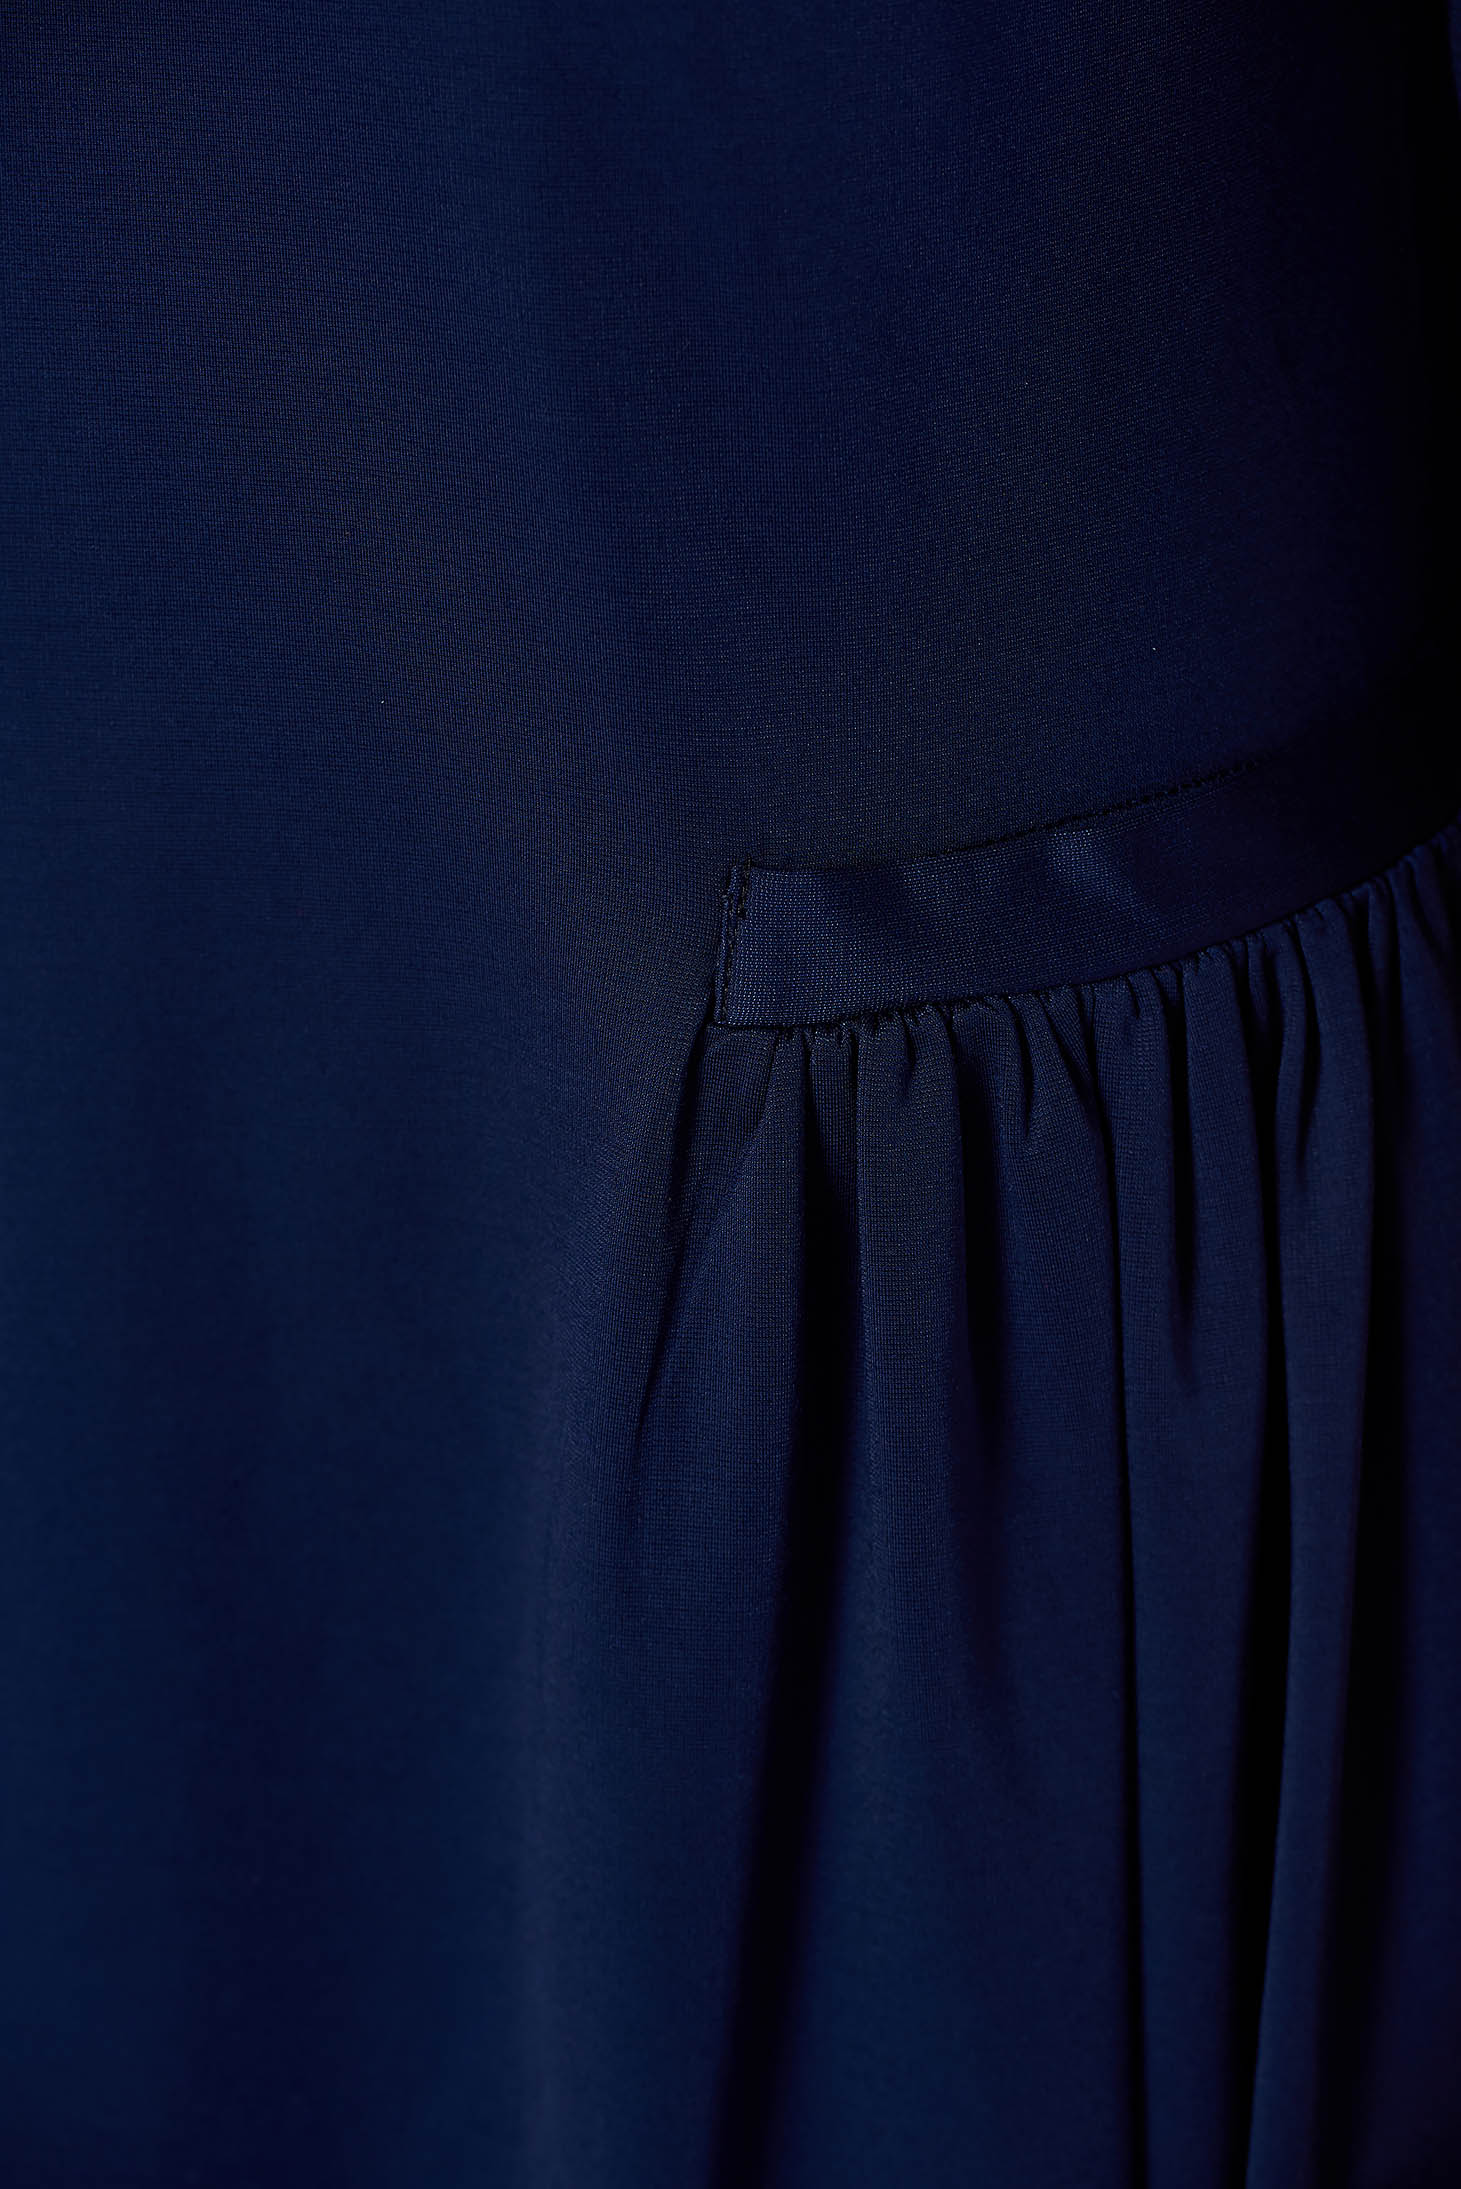 Darkblue office flared dress slightly elastic fabric with pockets 4 - StarShinerS.com